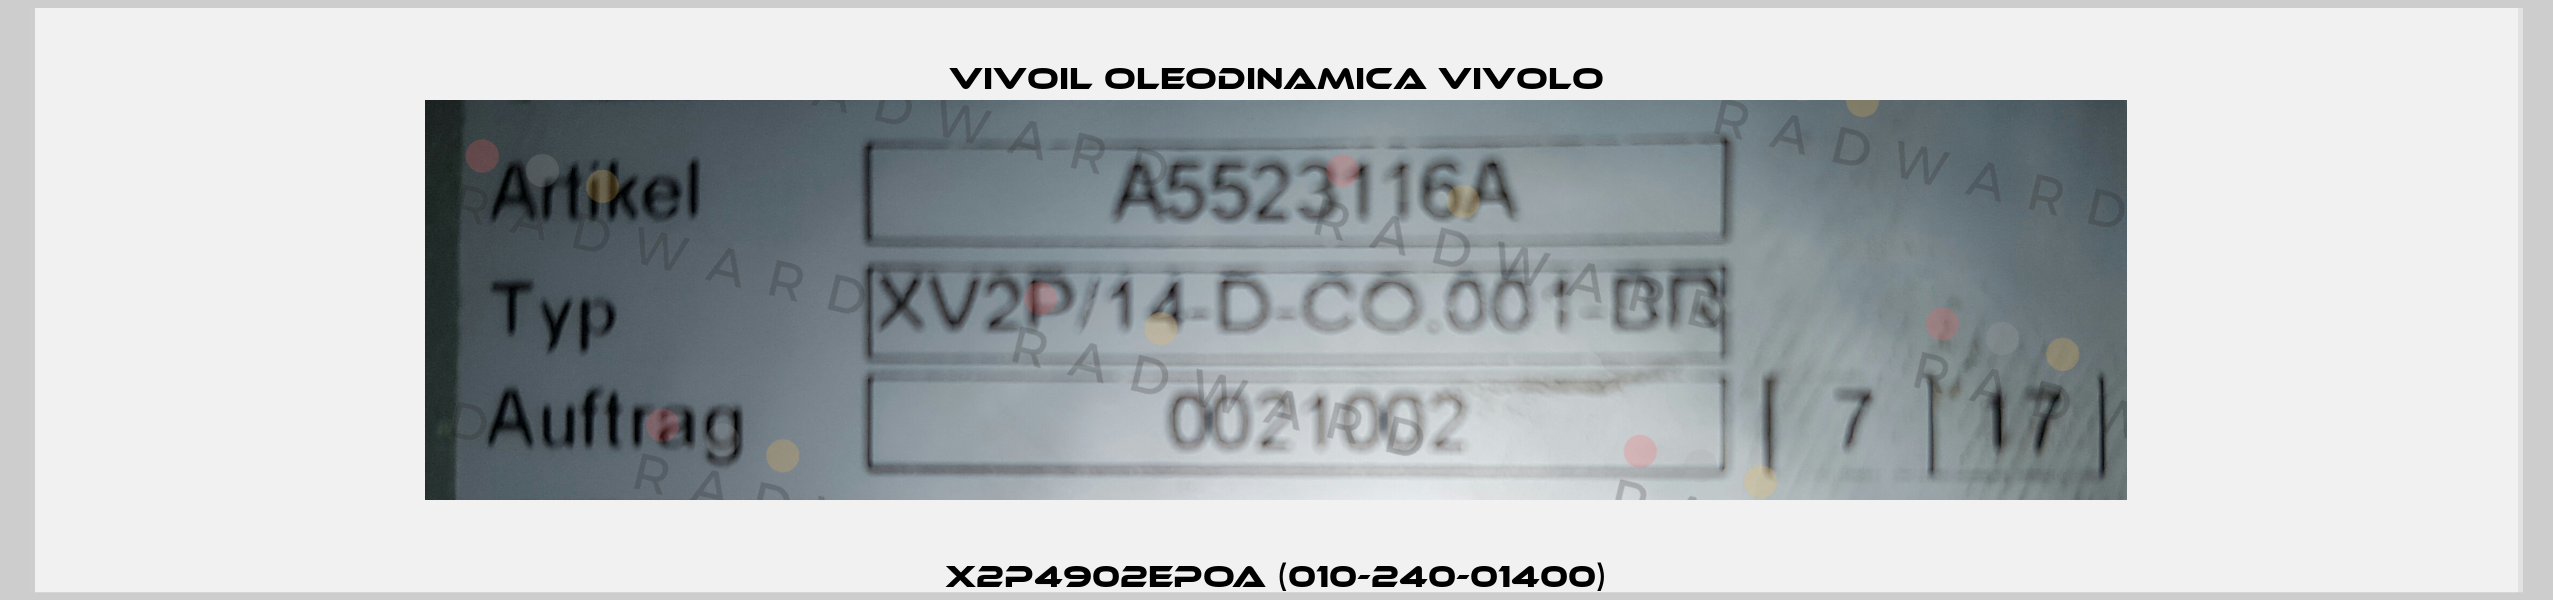 X2P4902EPOA (010-240-01400) Vivoil Oleodinamica Vivolo